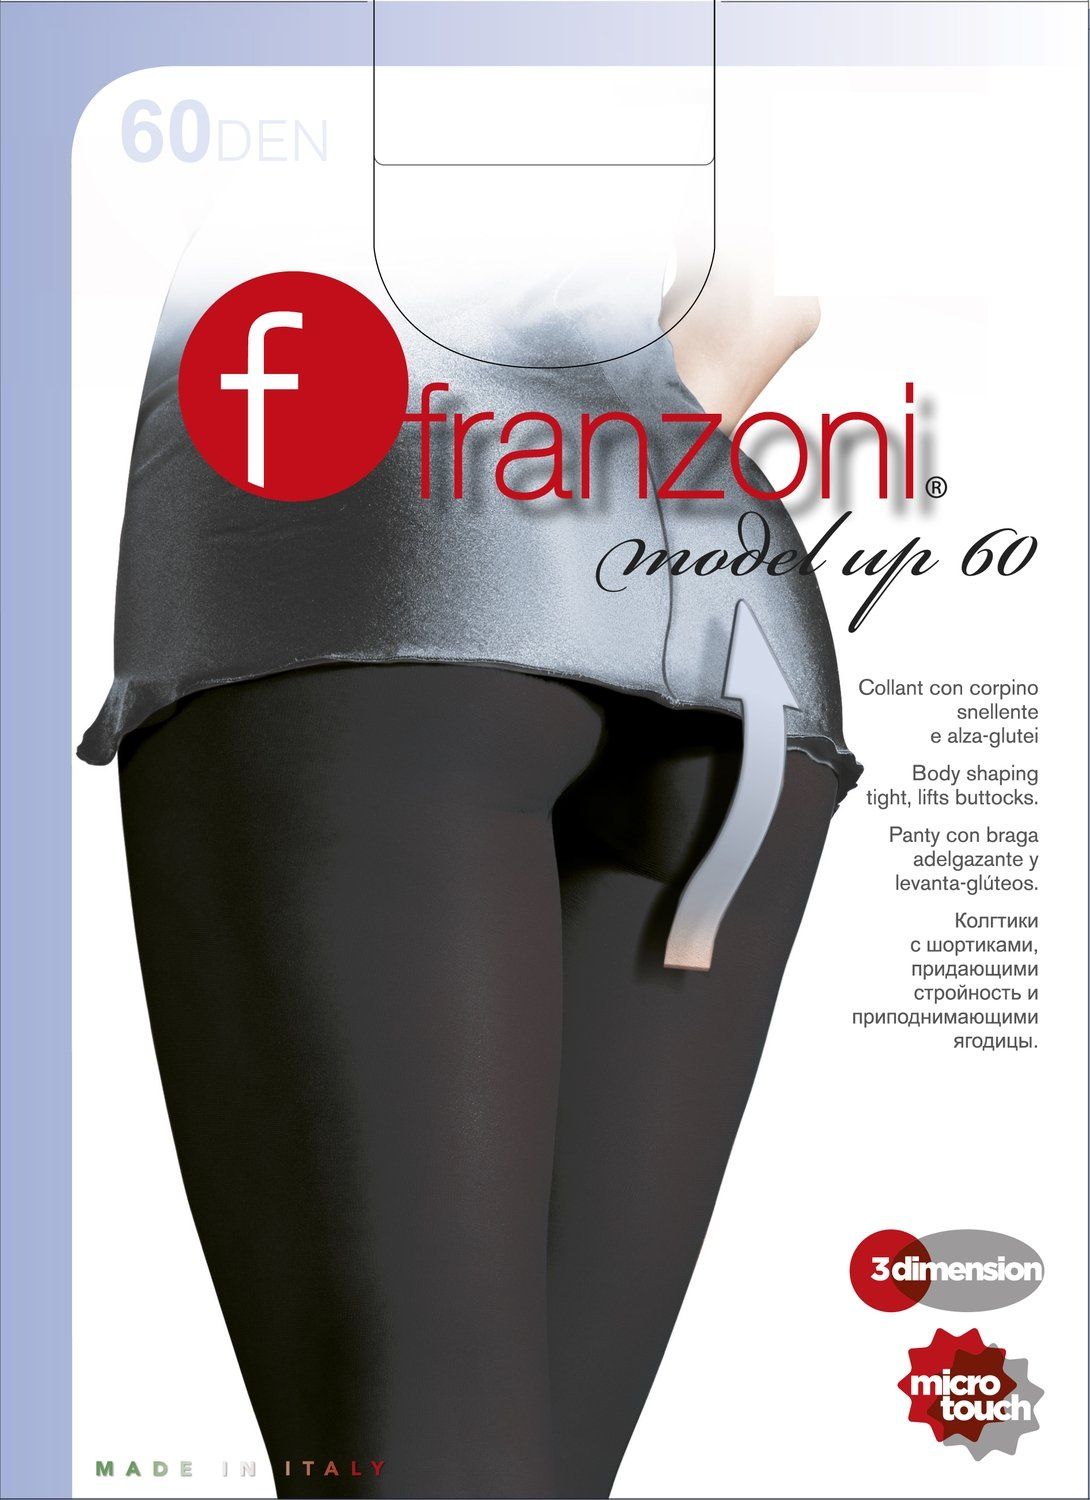  Franzoni Model-Up 60--4 , 48 